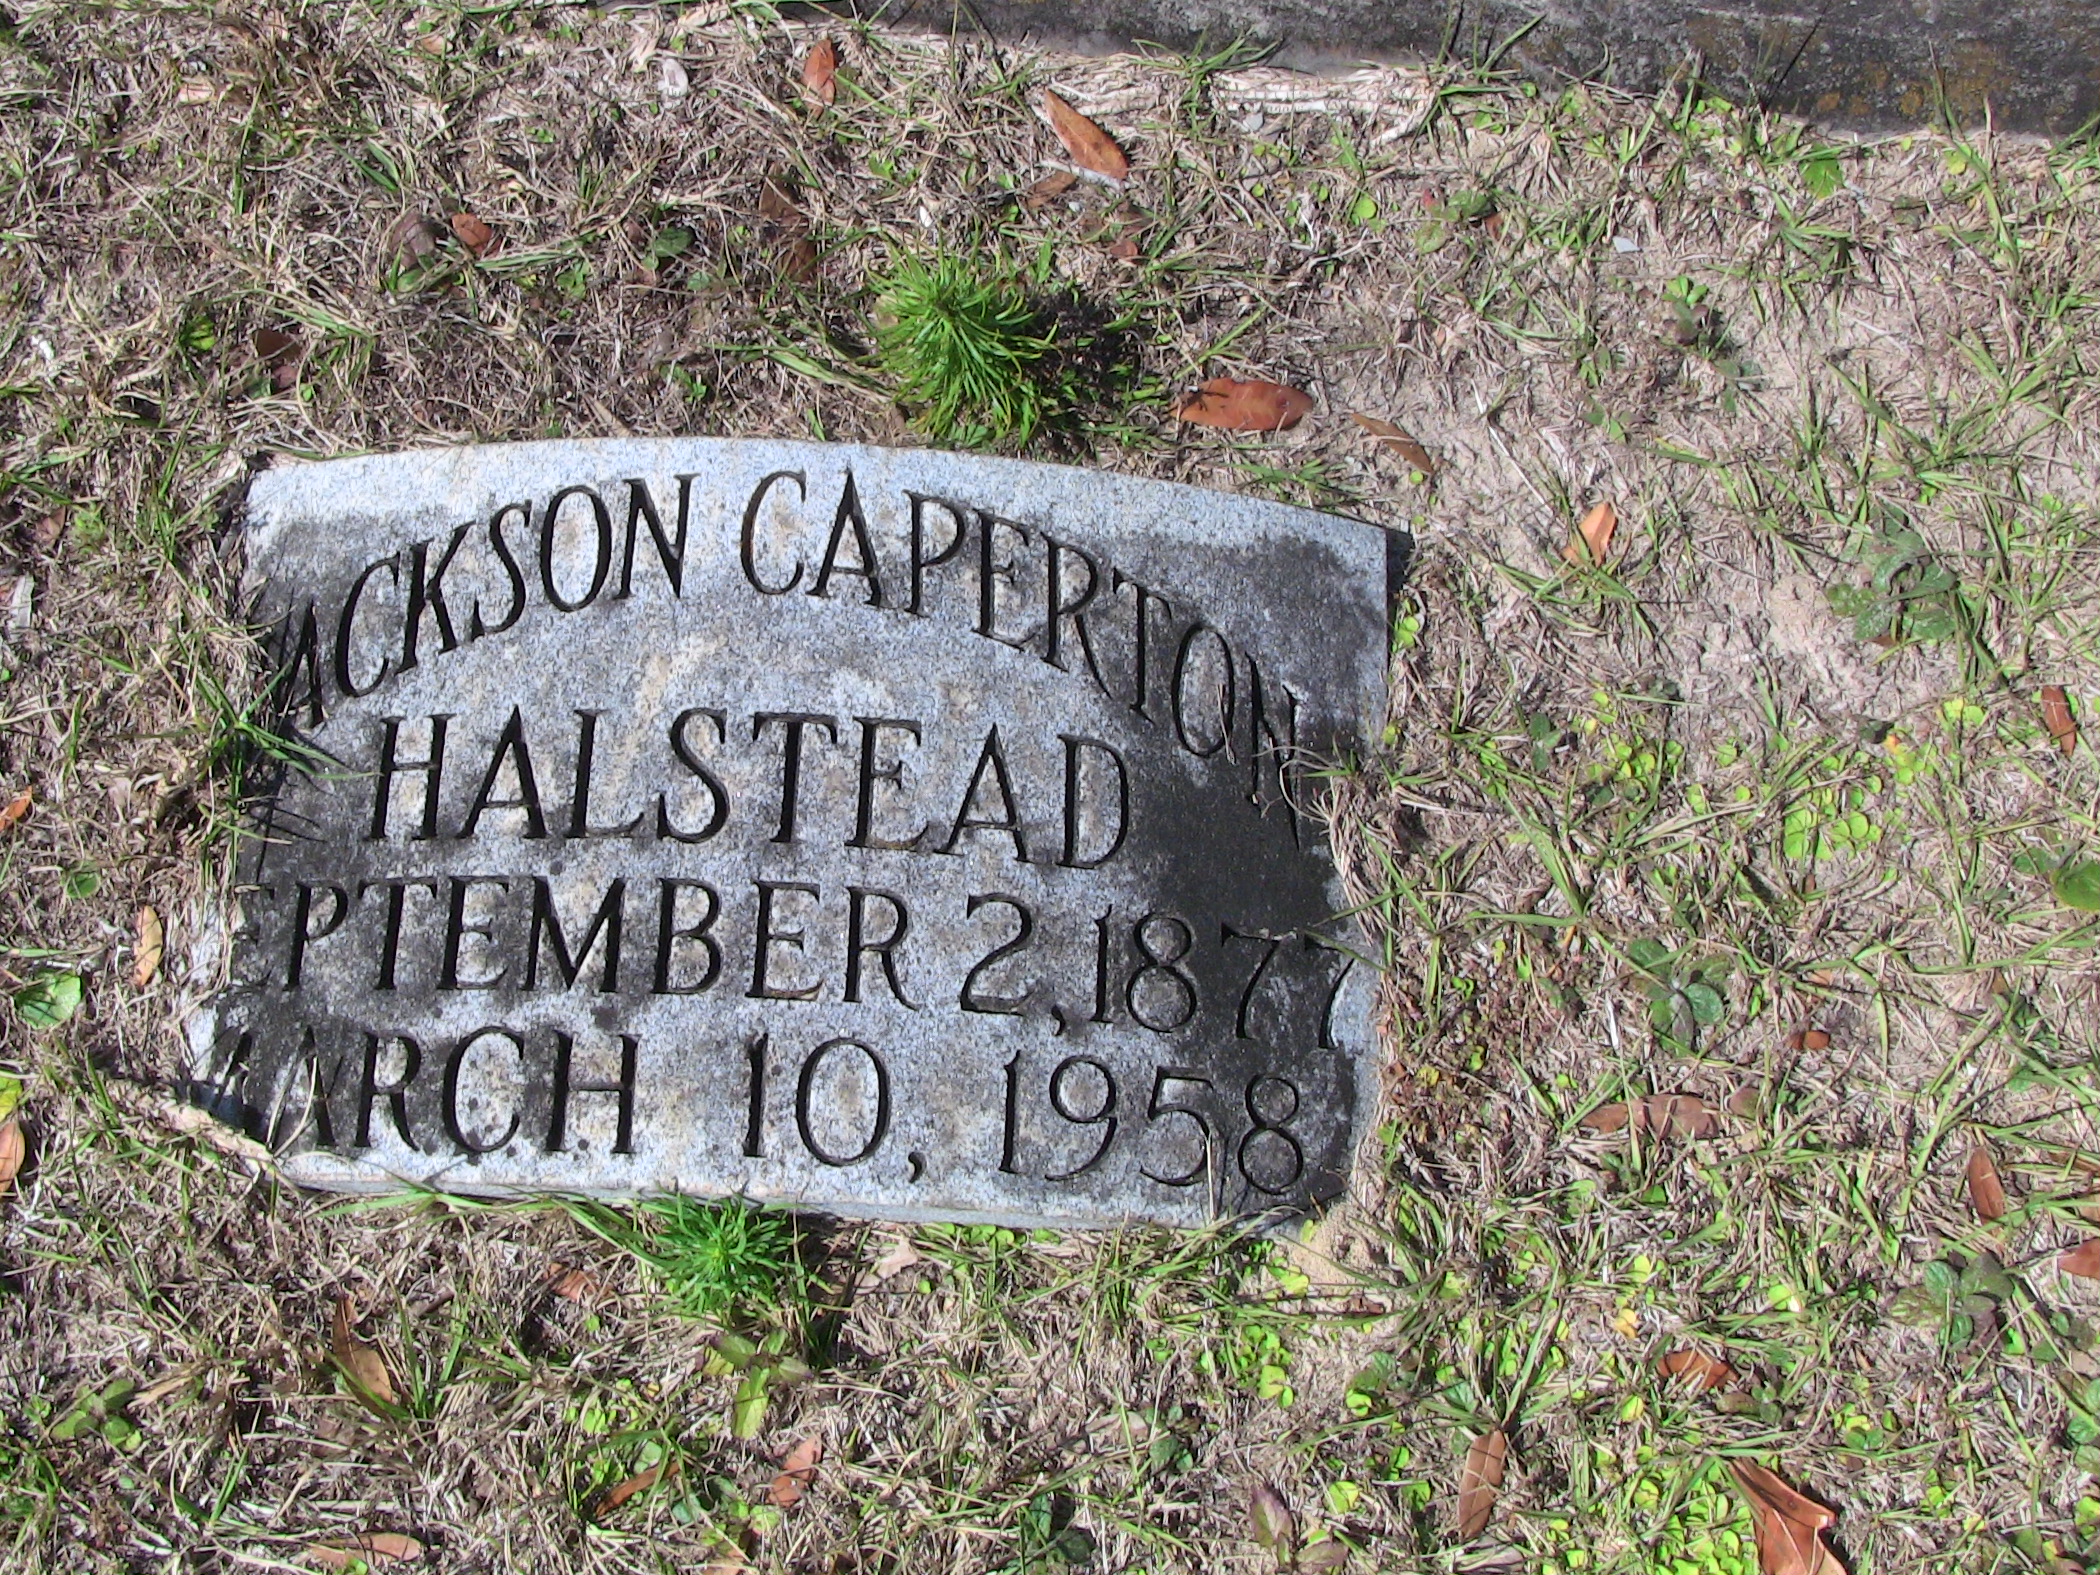 Jackson Carpenton Halstead